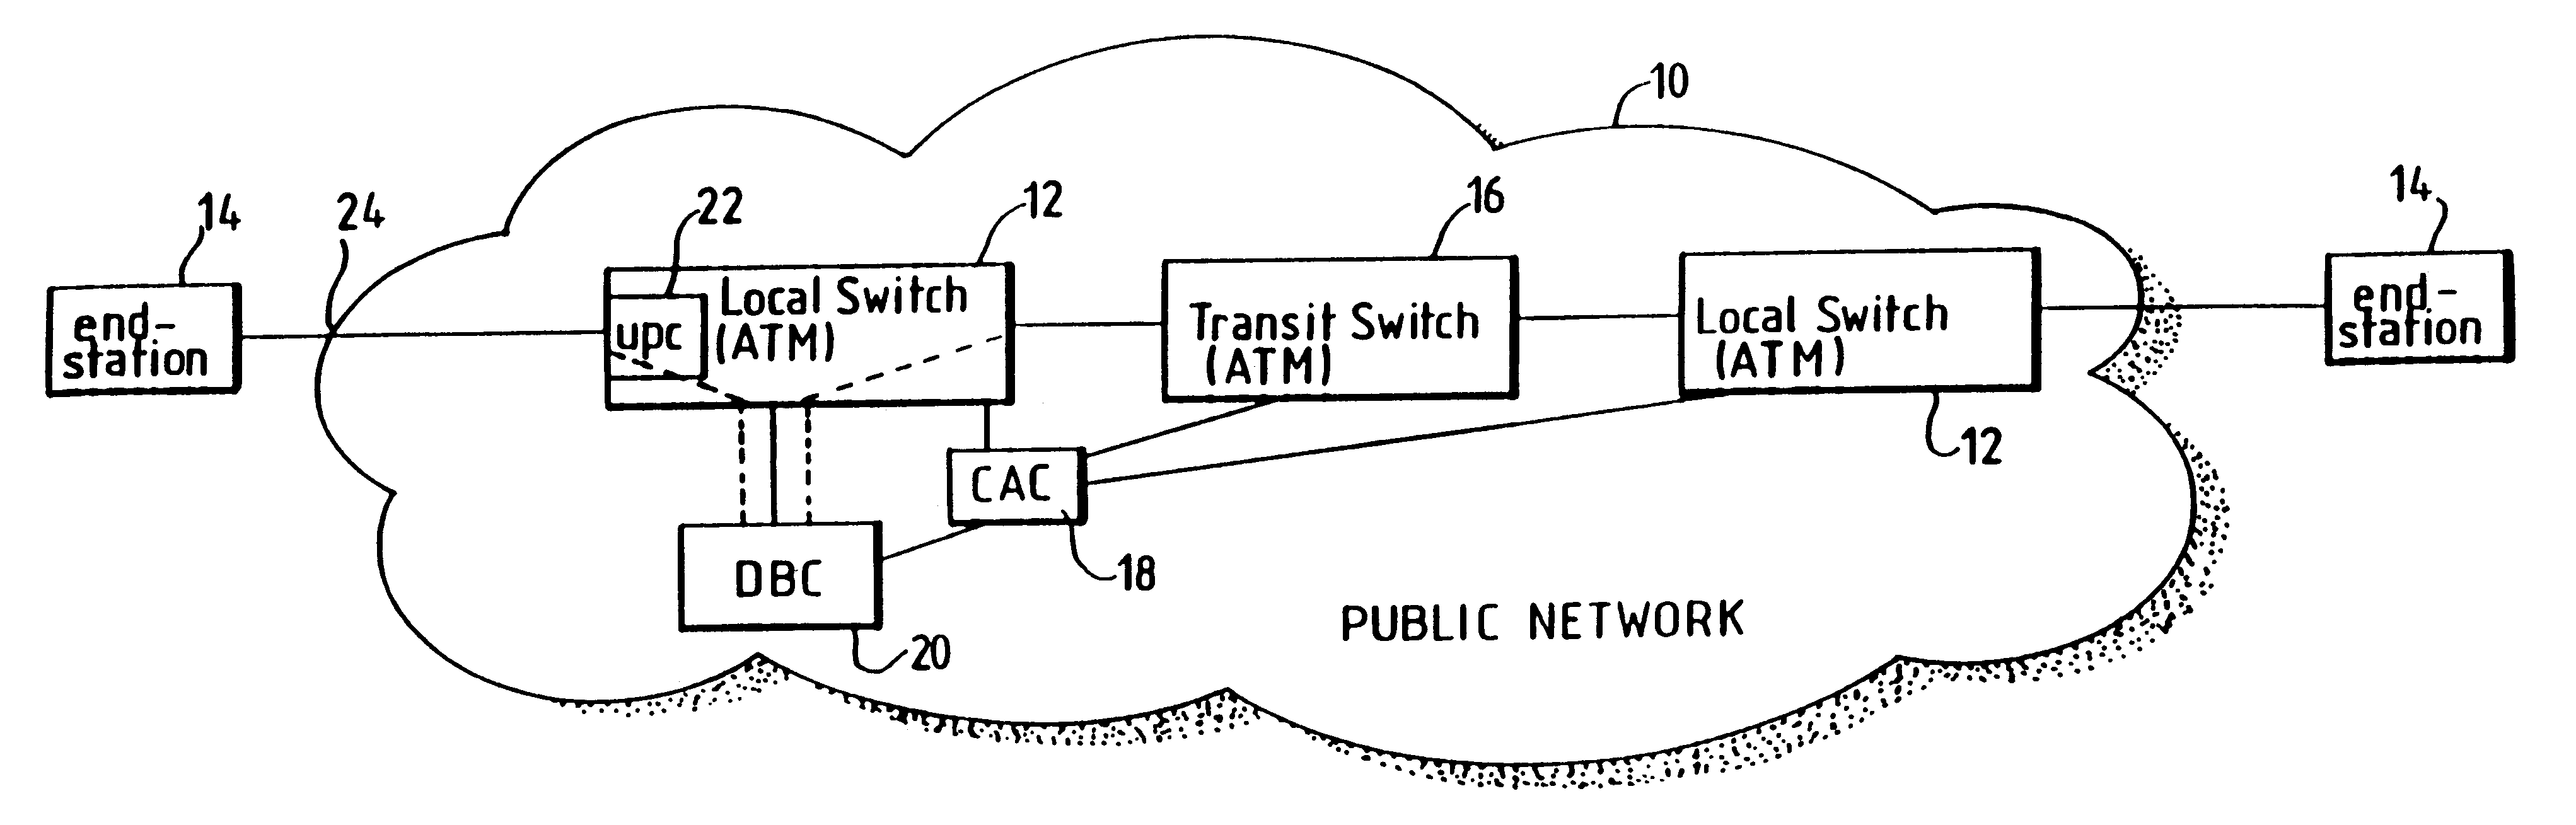 Broadband switching system